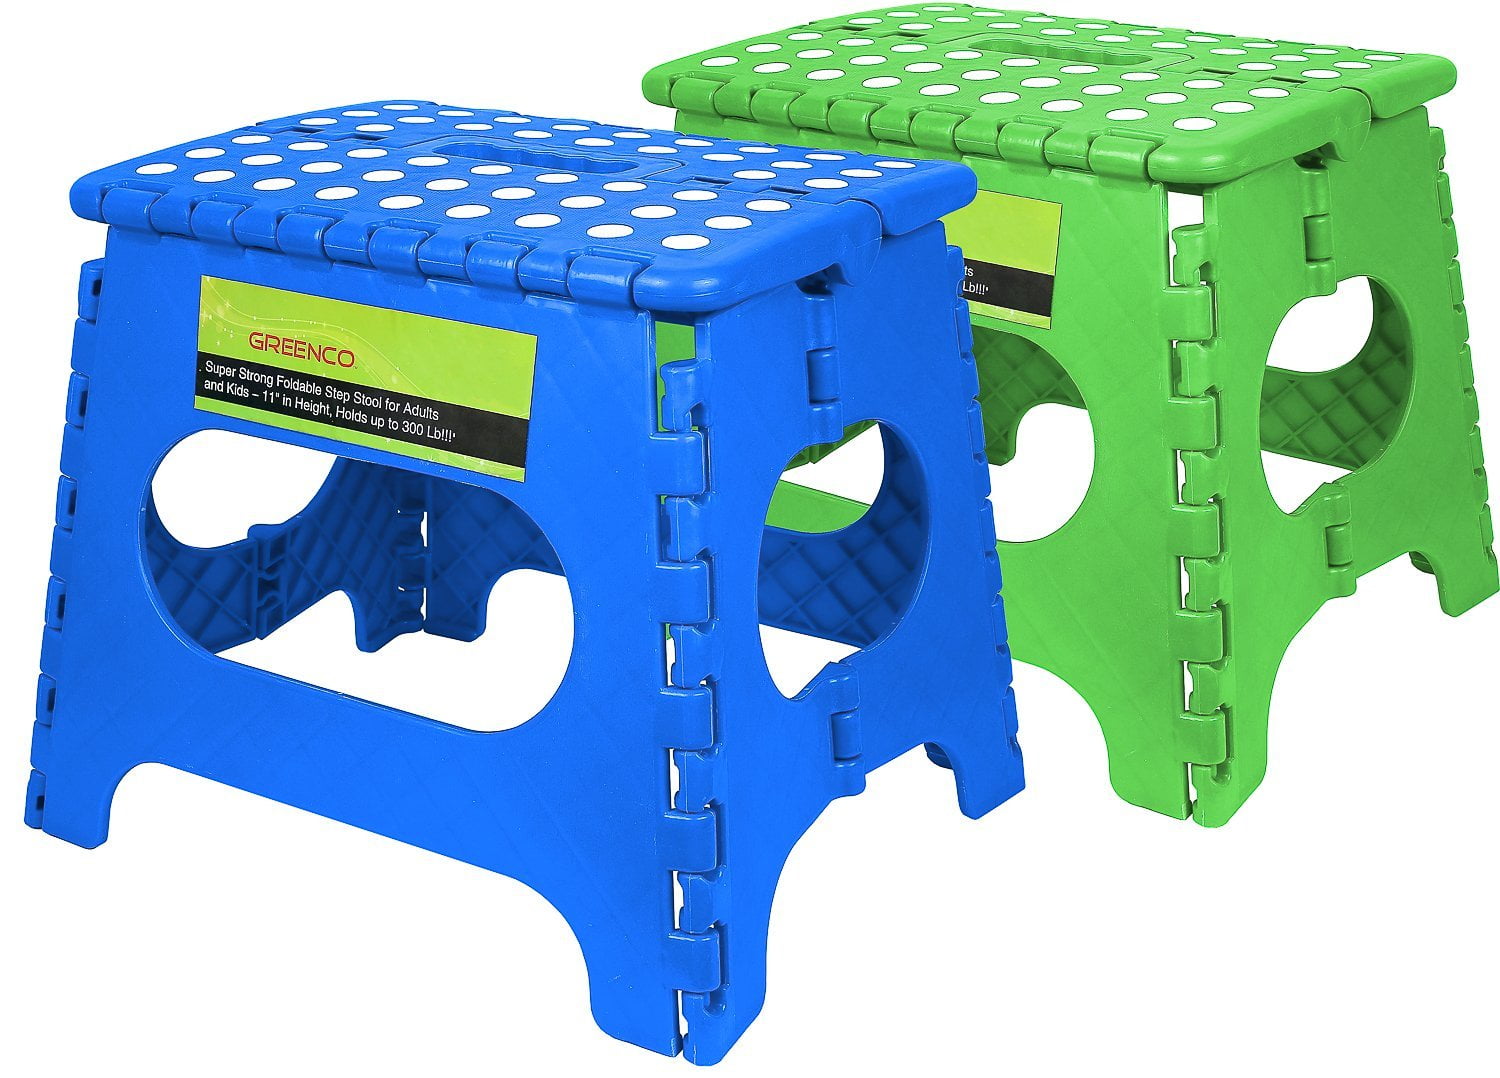 pound capacity step stool bench,New Green Folding Plastic Stepstool,300 lb 